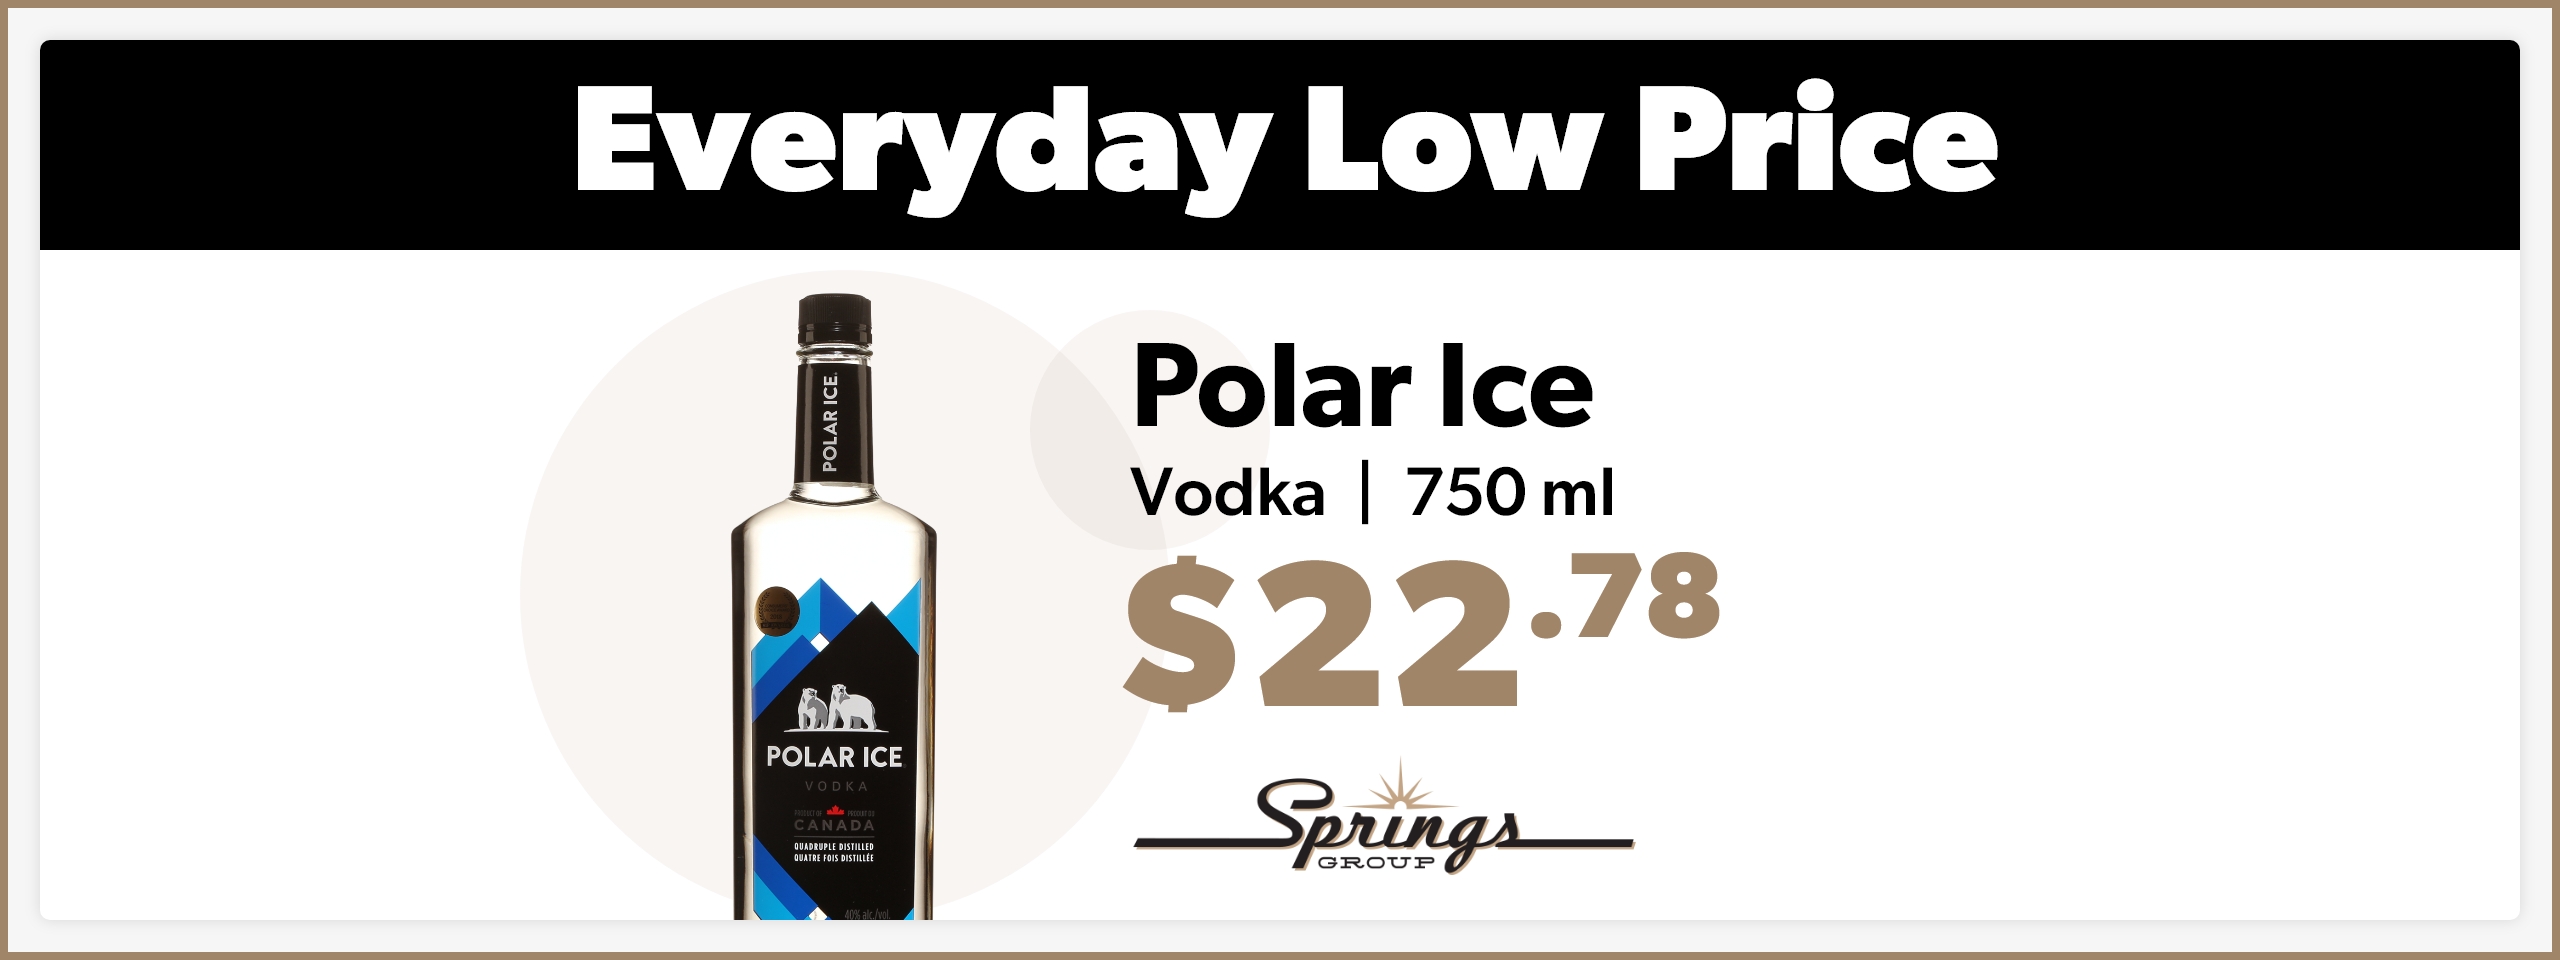 Polar Ice everyday low price March